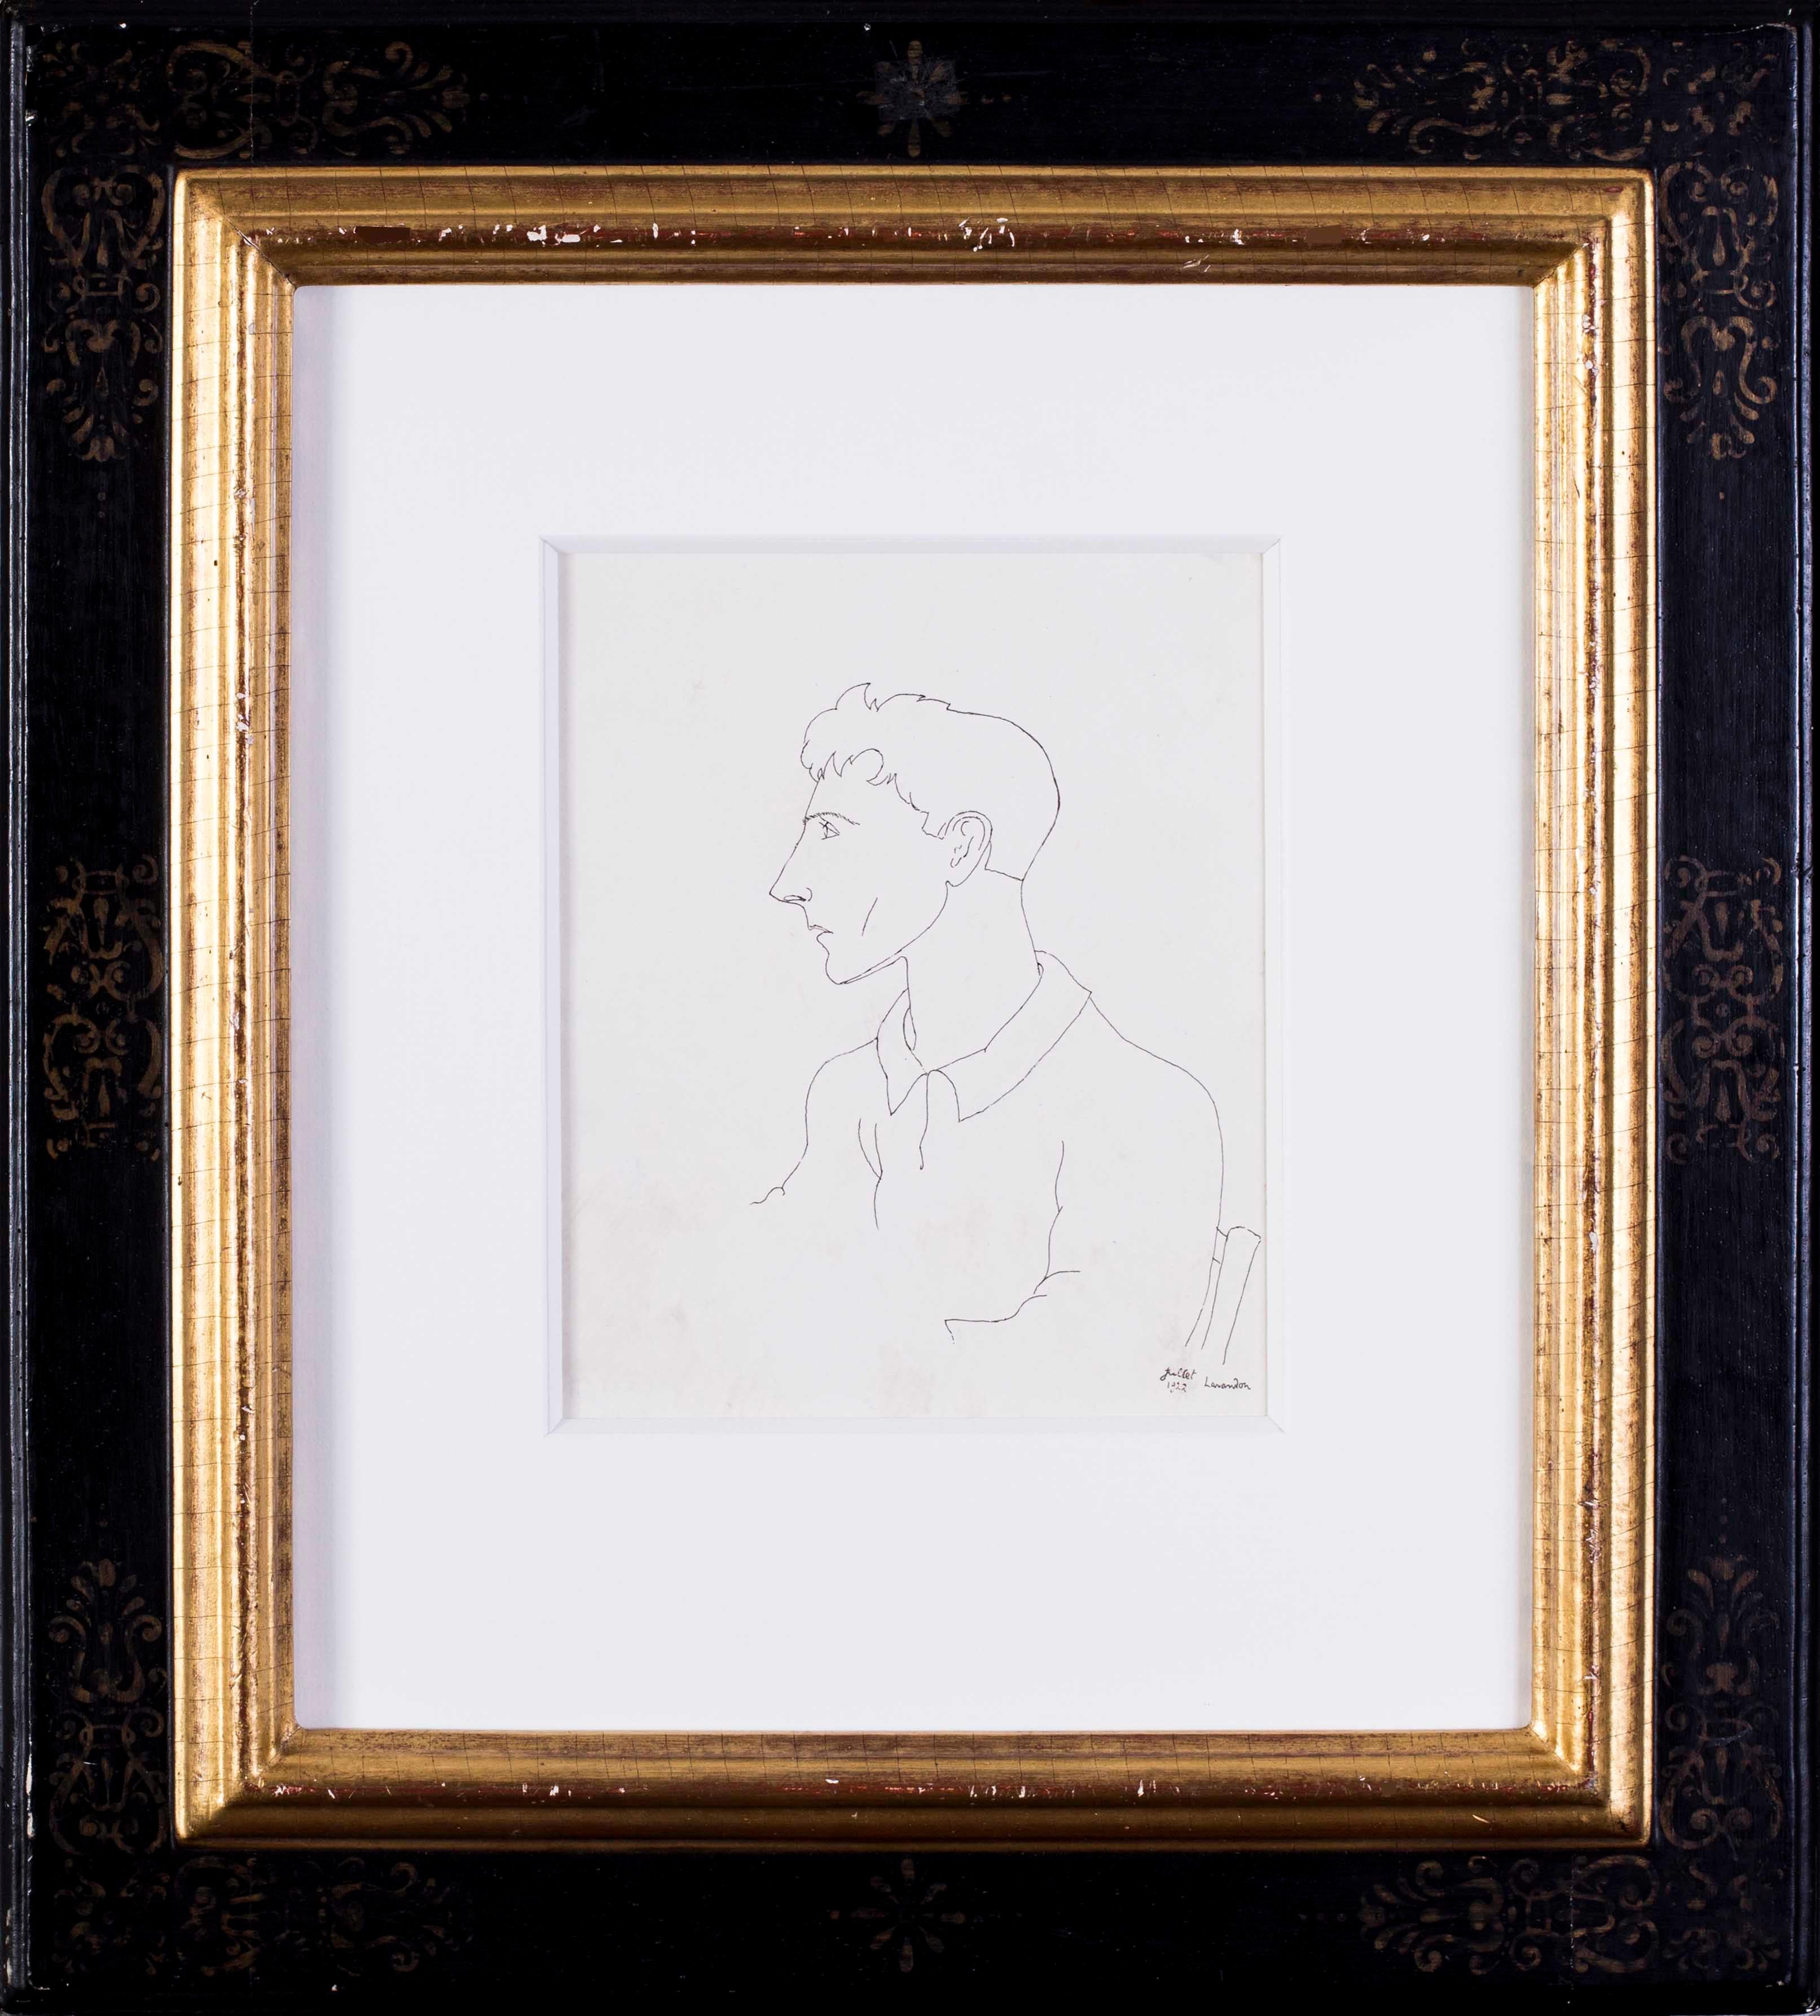 Early Jean Cocteau, Self Portrait, ink drawing, 1922